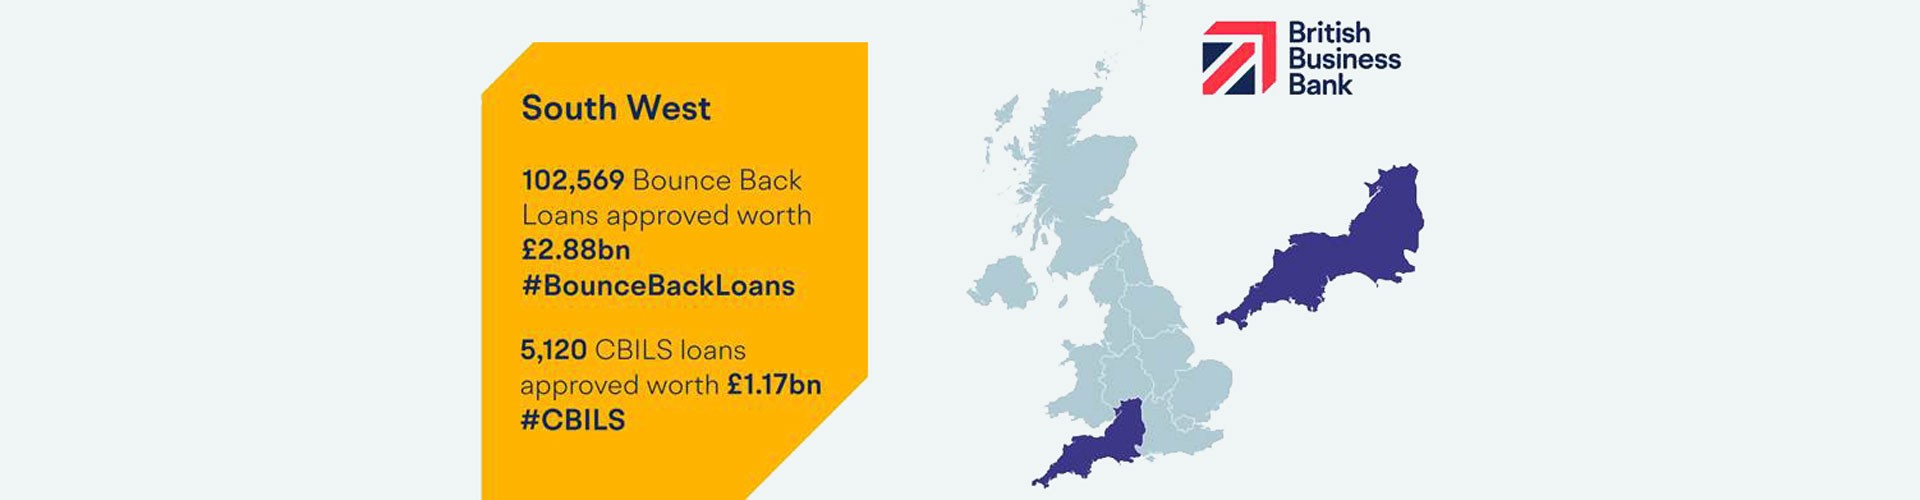 british business bank infographic